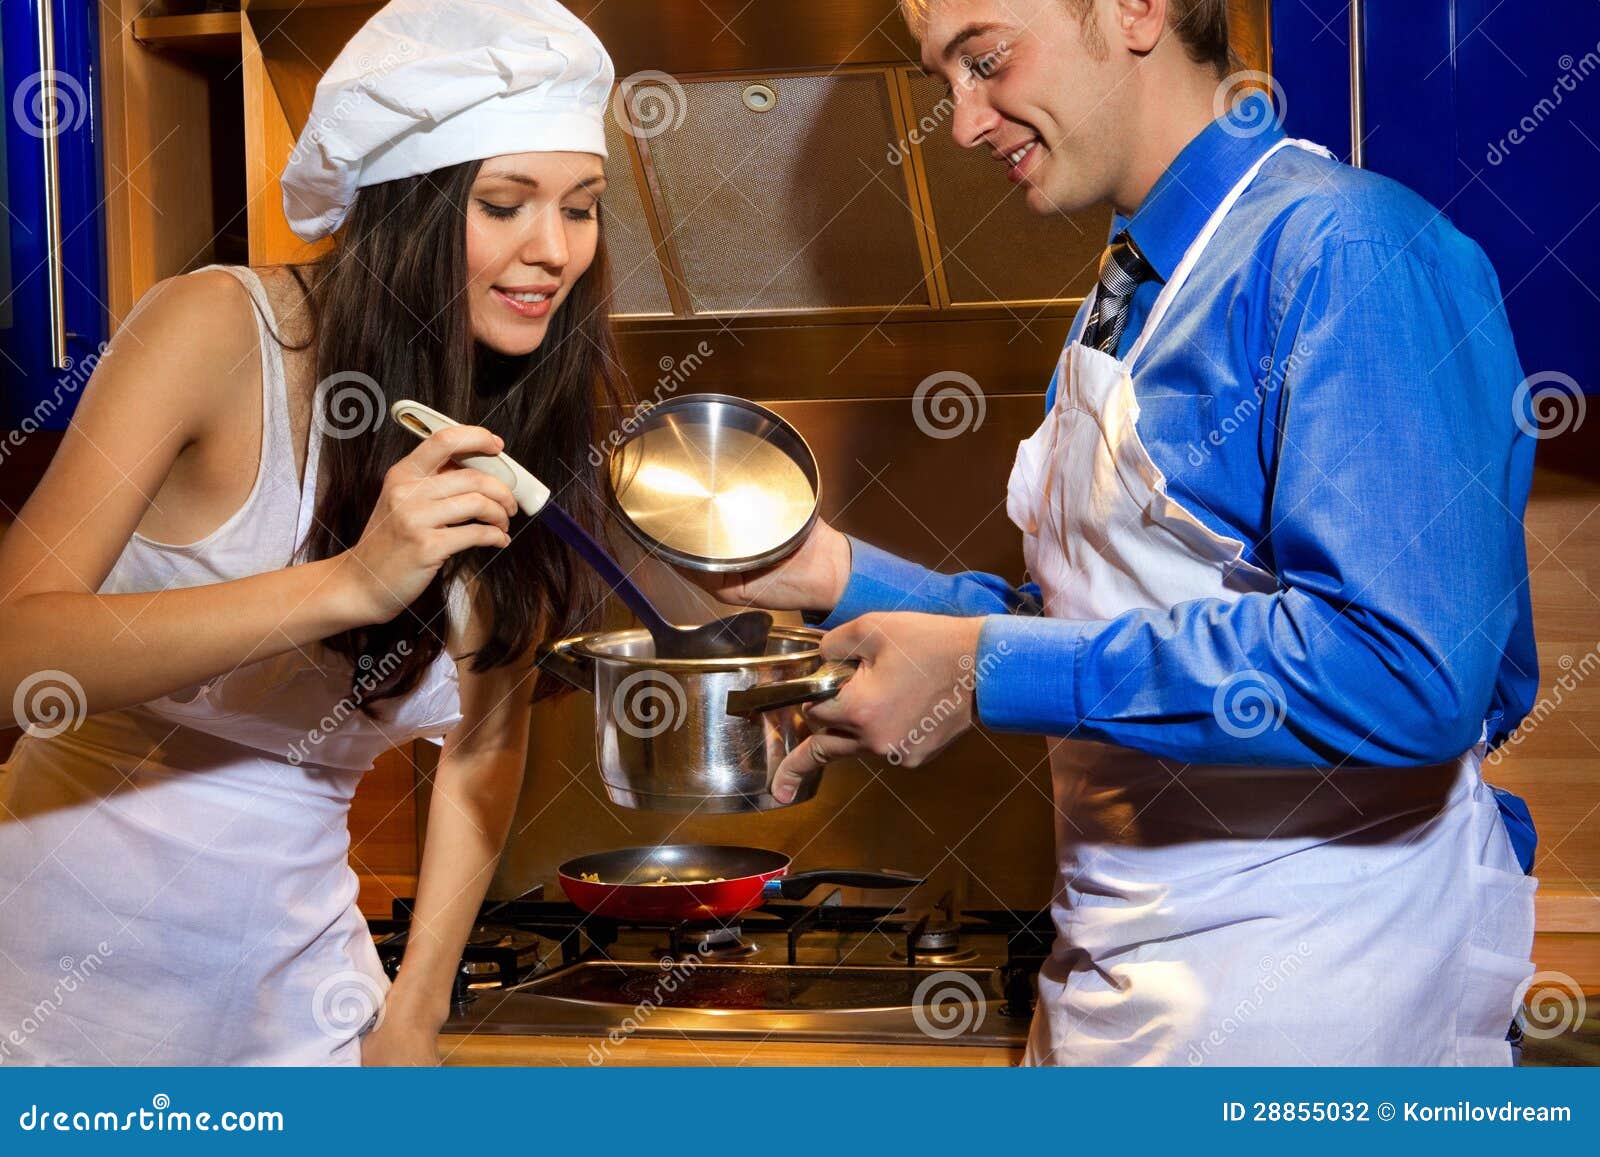 Romantic Couple Kitchen 28855032 